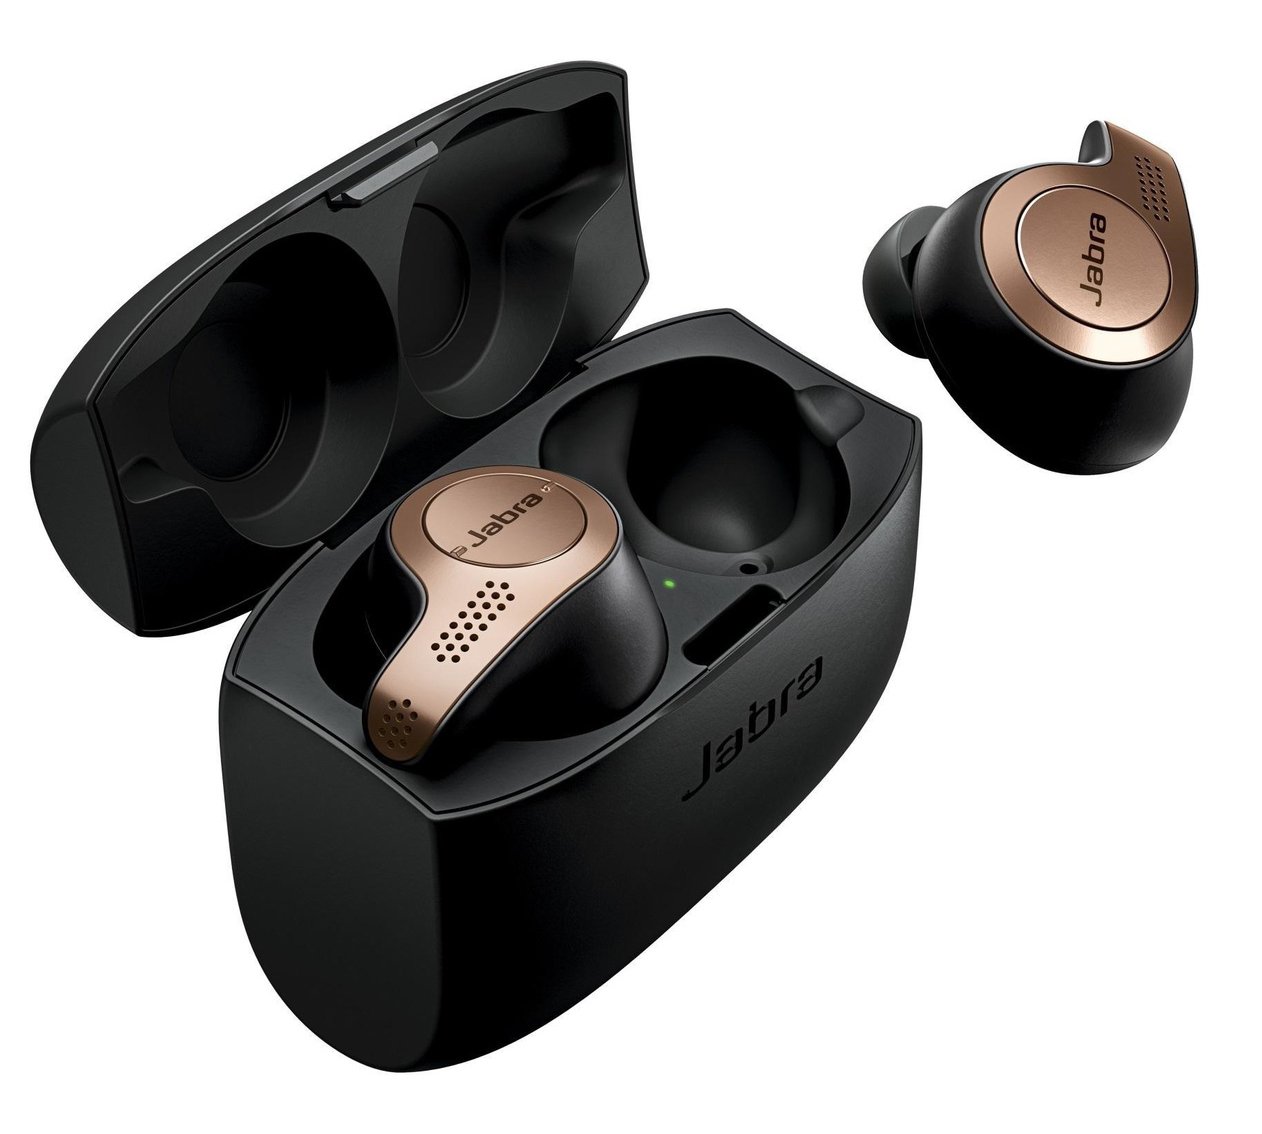 Jabra Elite 65t True Wireless Headphones - Copper/Black